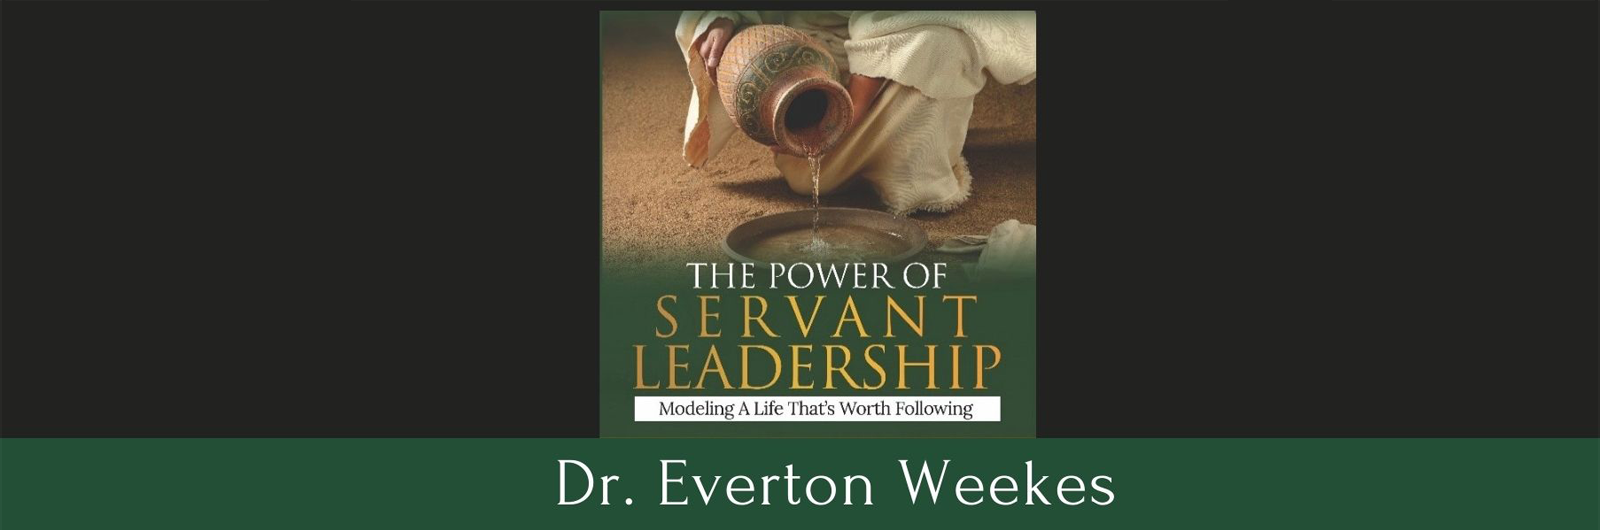 Power of Servant Leadership